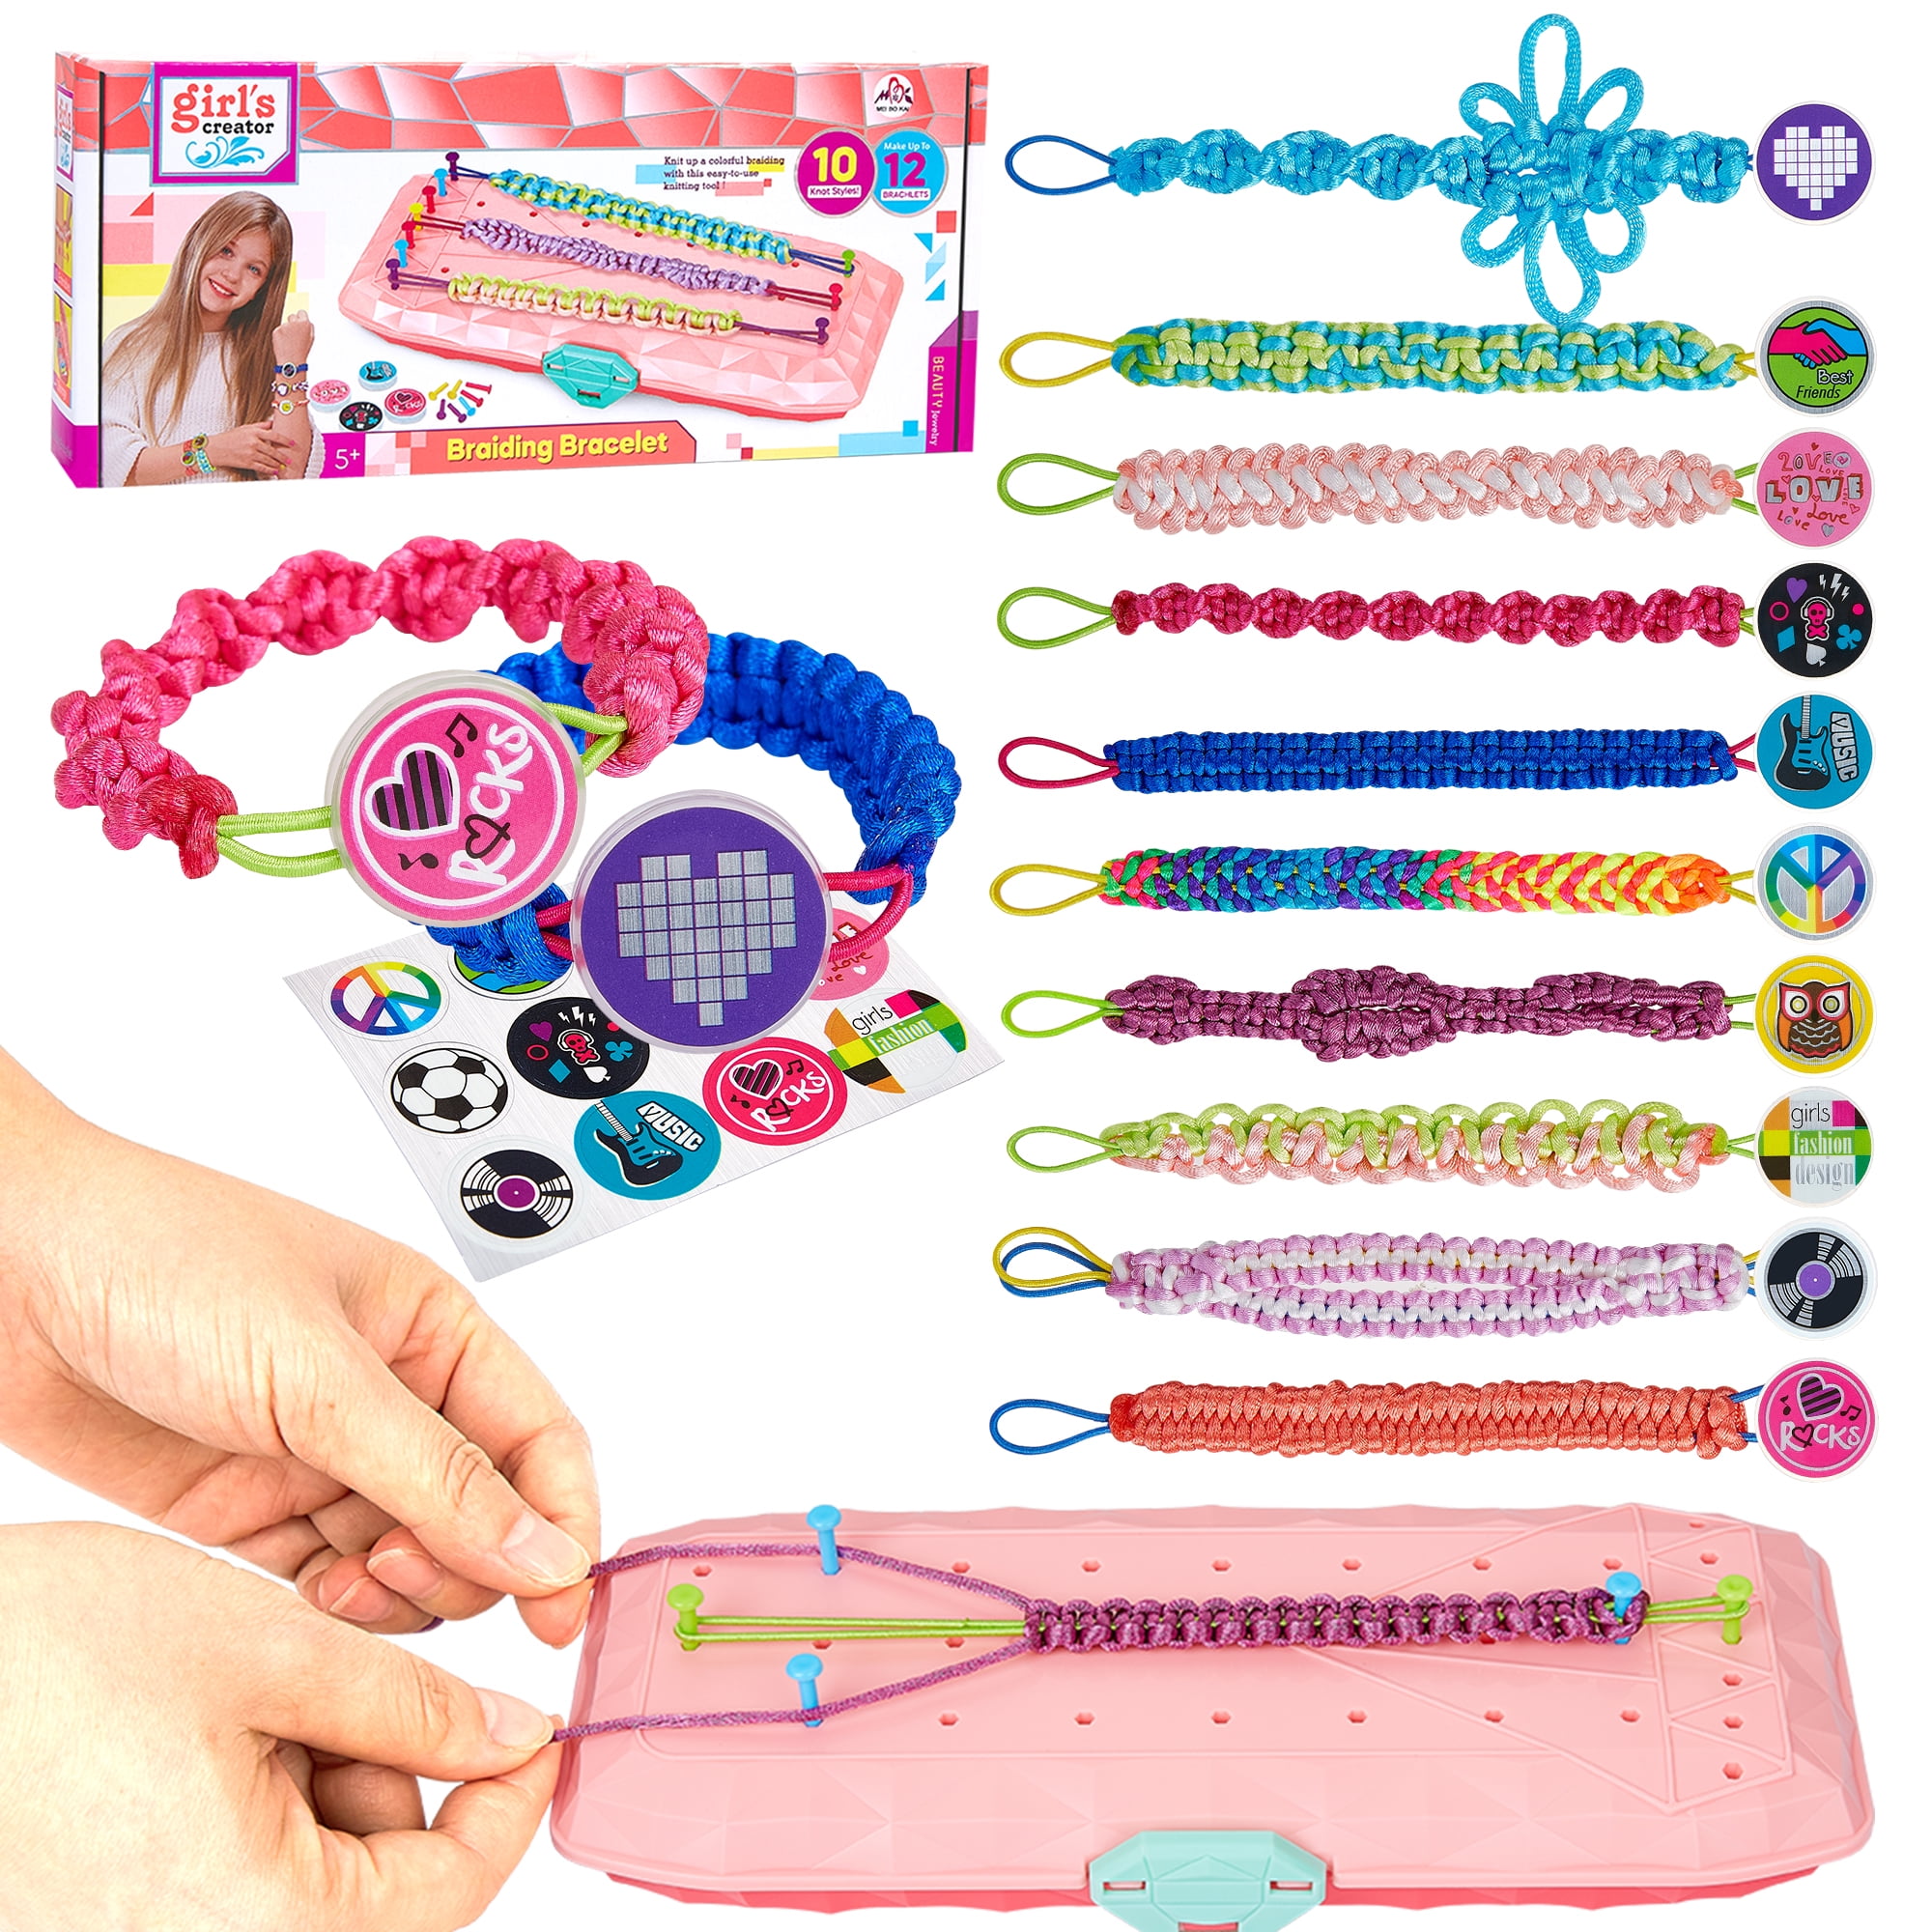 Friendship Bracelet Making Kit Toys, Ages 7 8 9 10 11 12 Year Old Girls ...